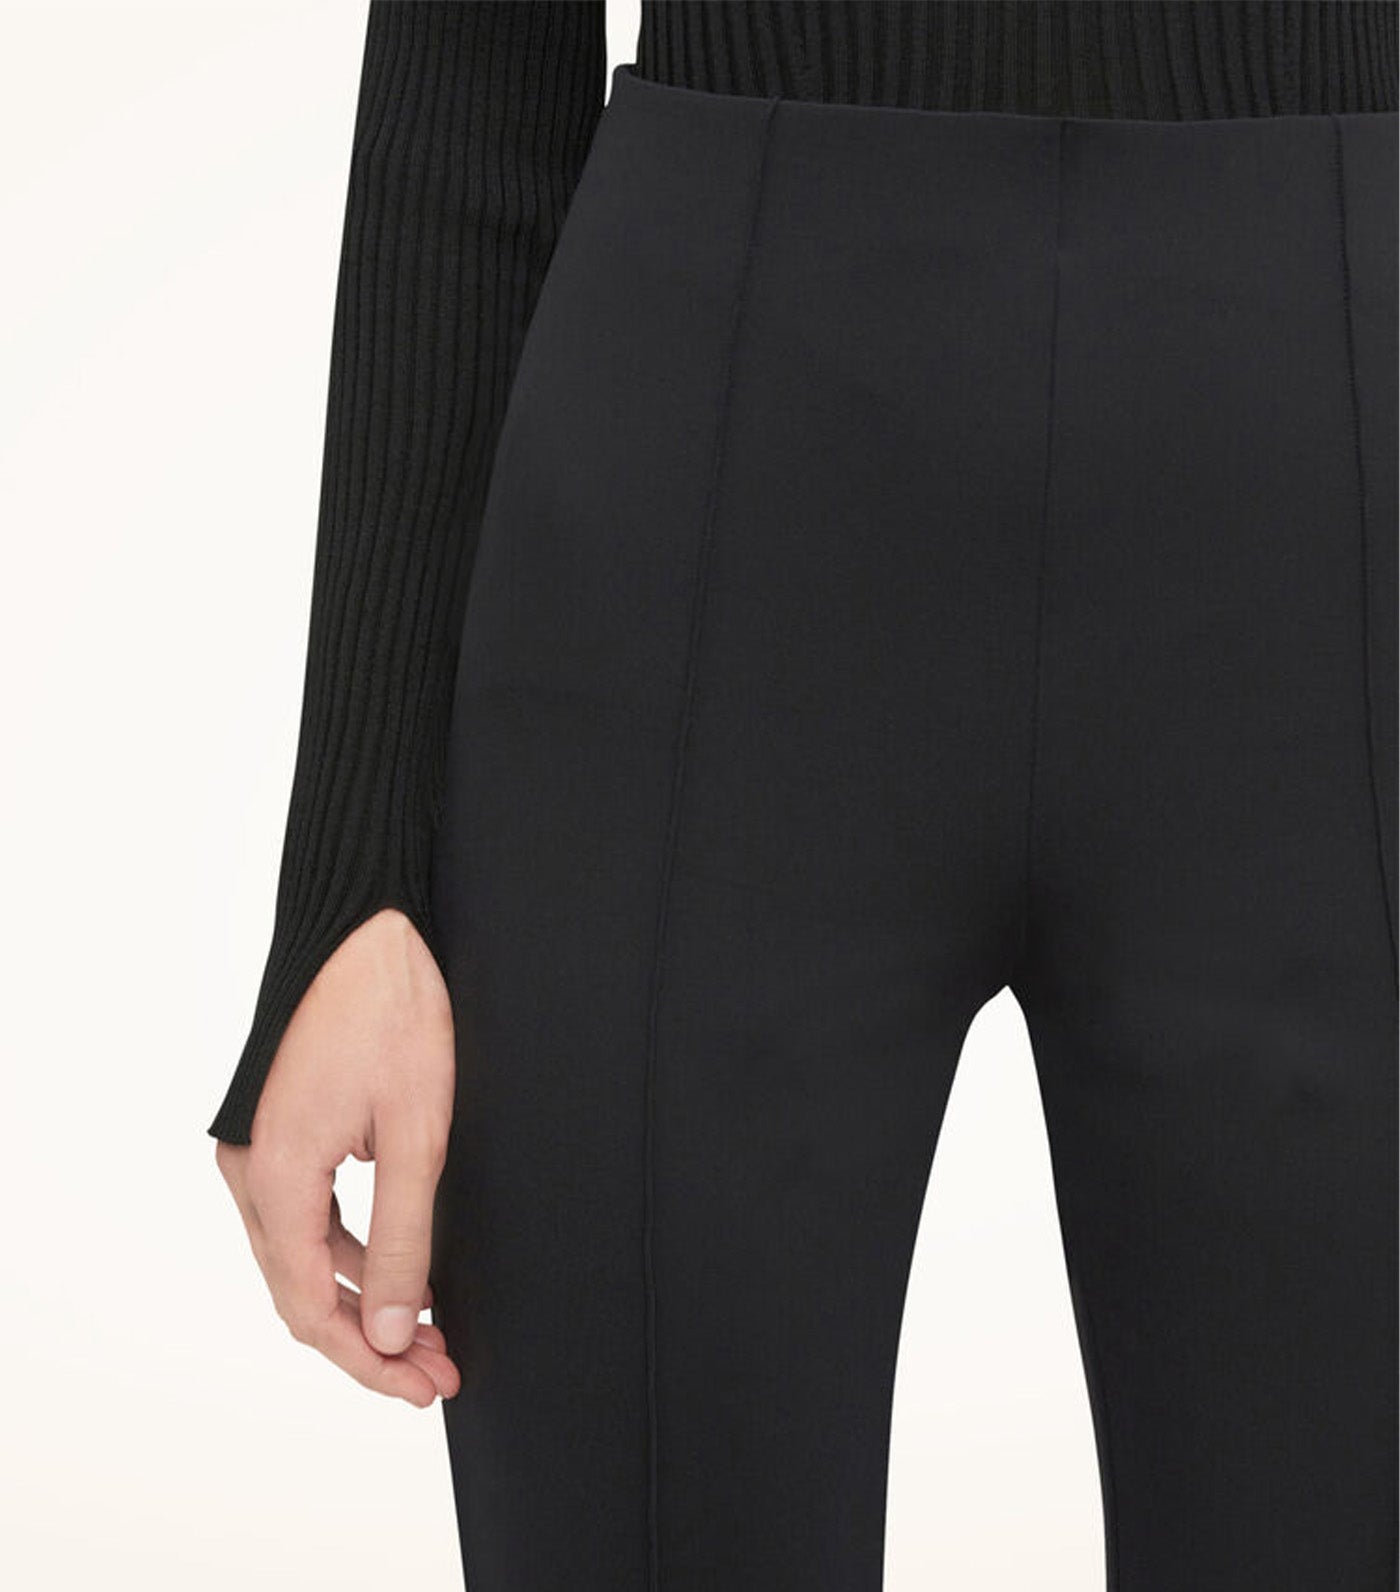 Intricate Sheer Pattern C&S Trousers Black